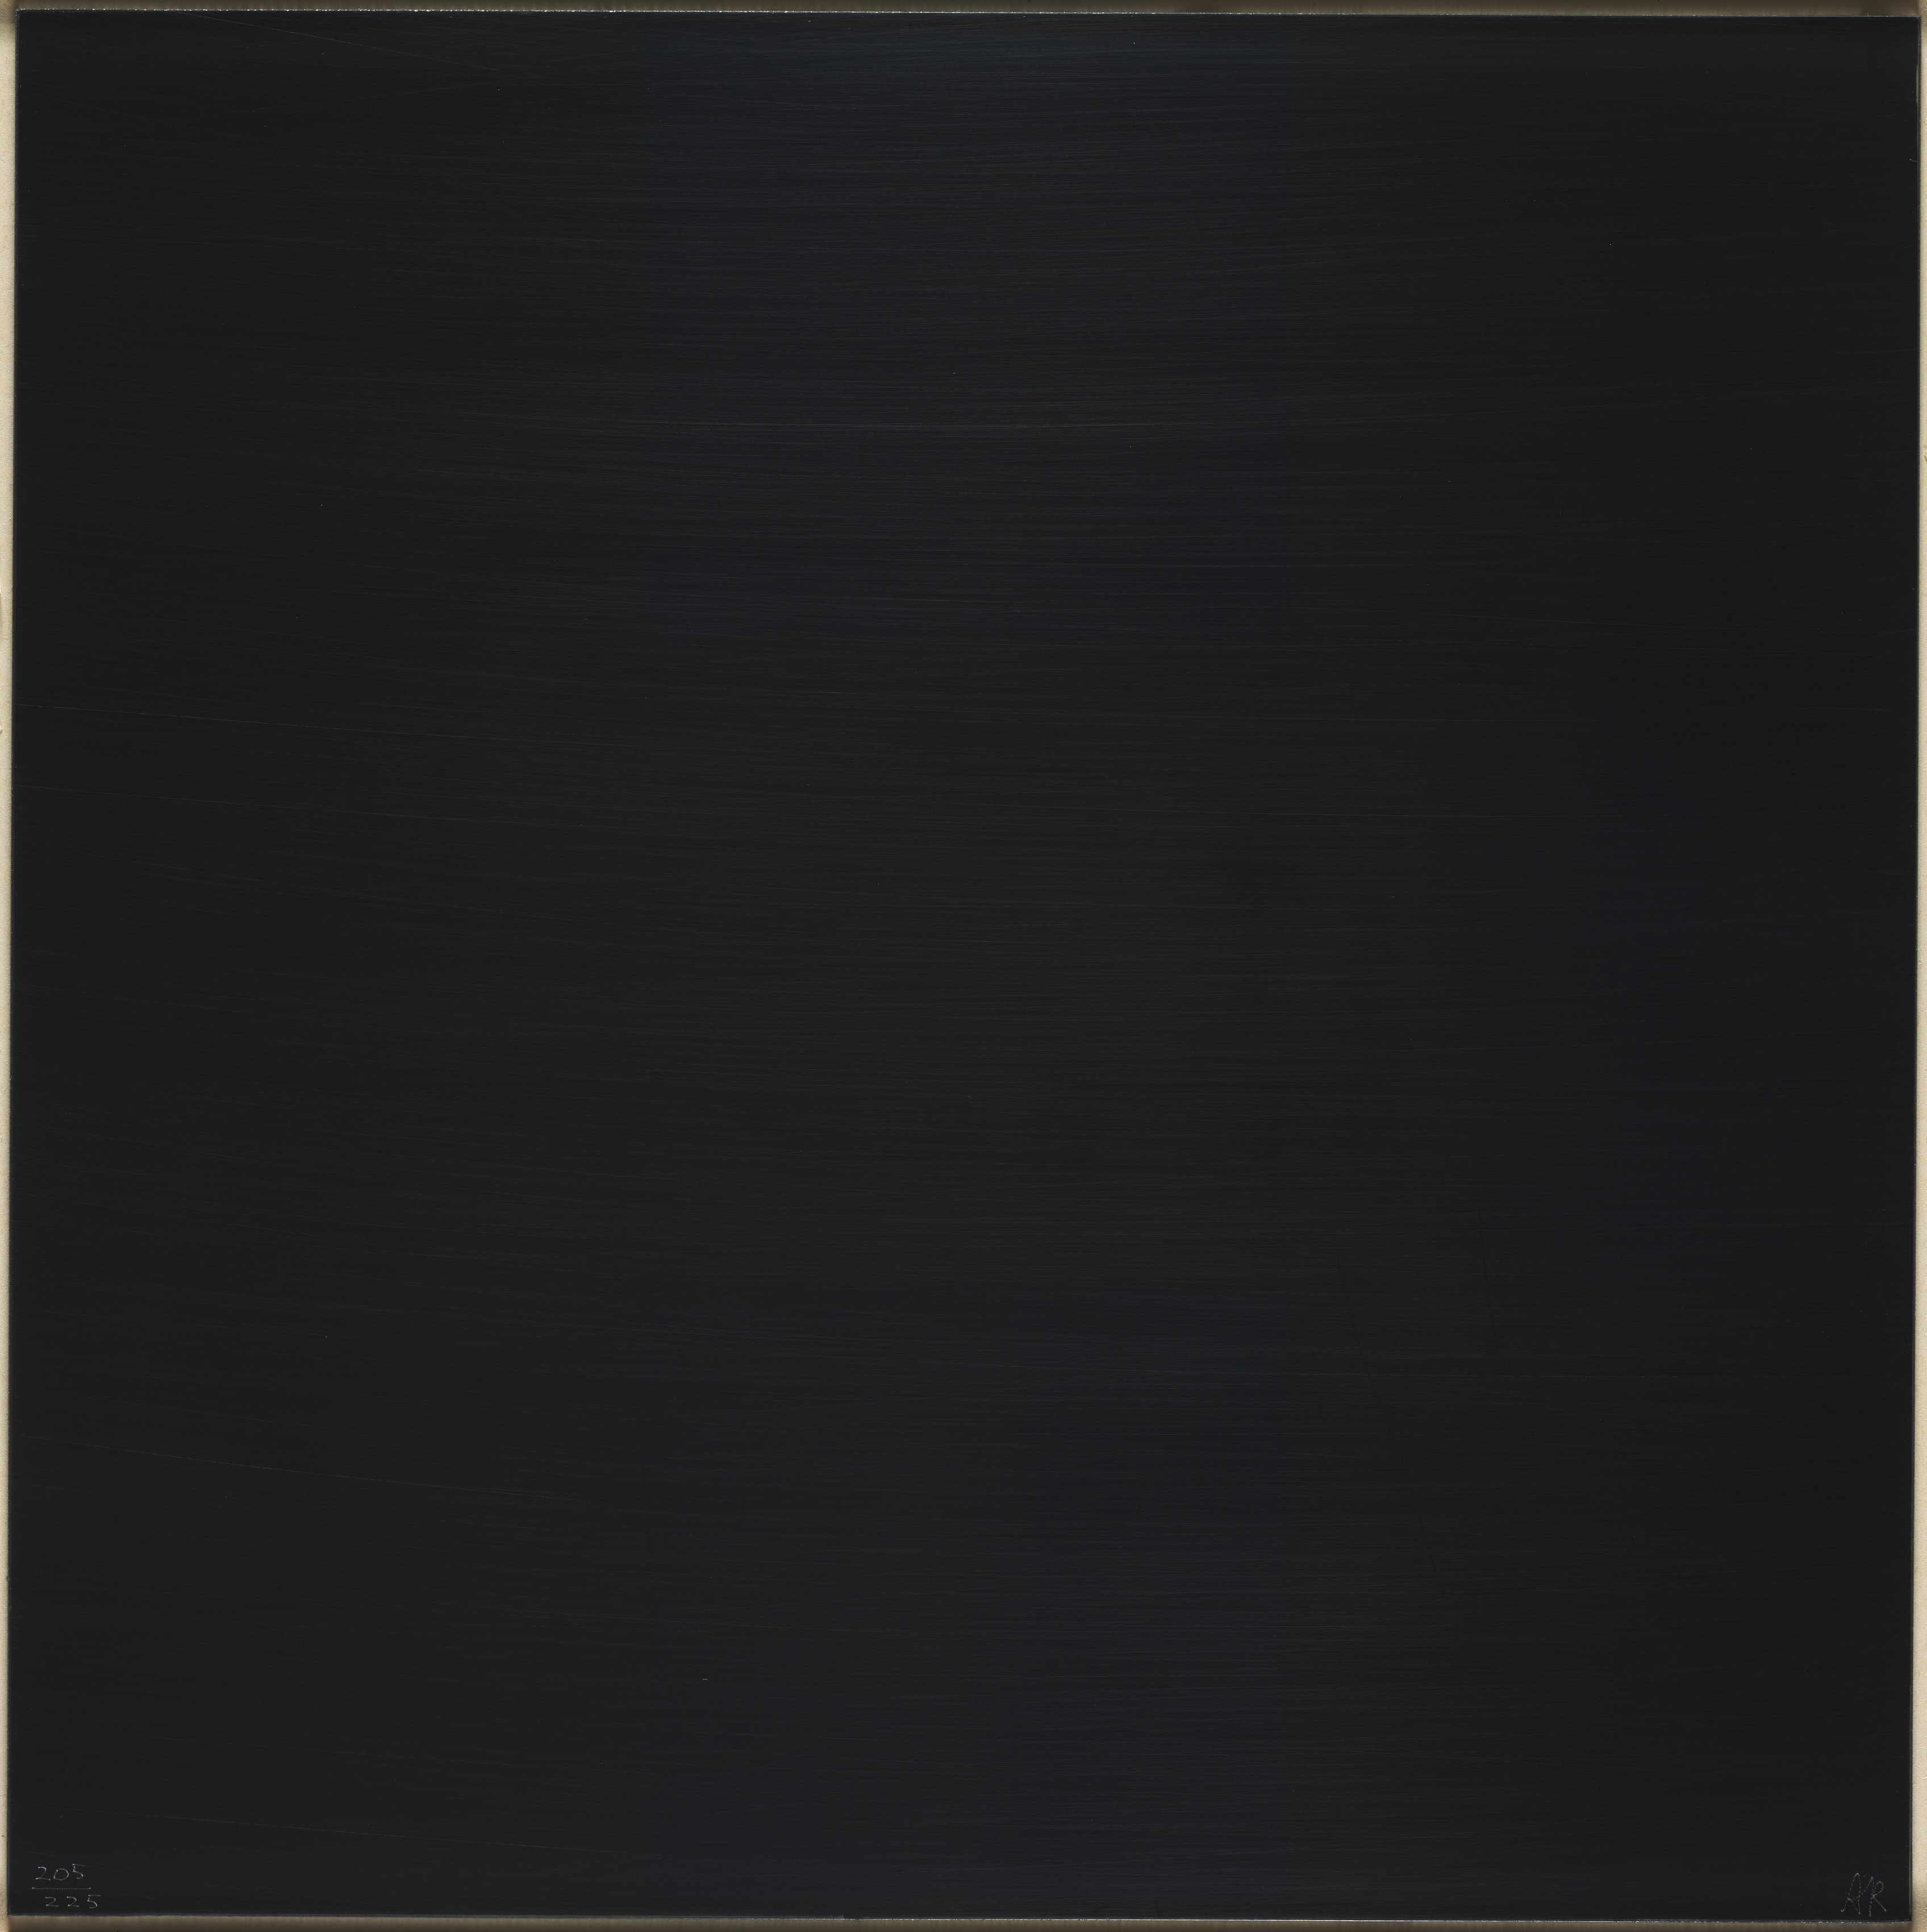 Untitled (Black Square)